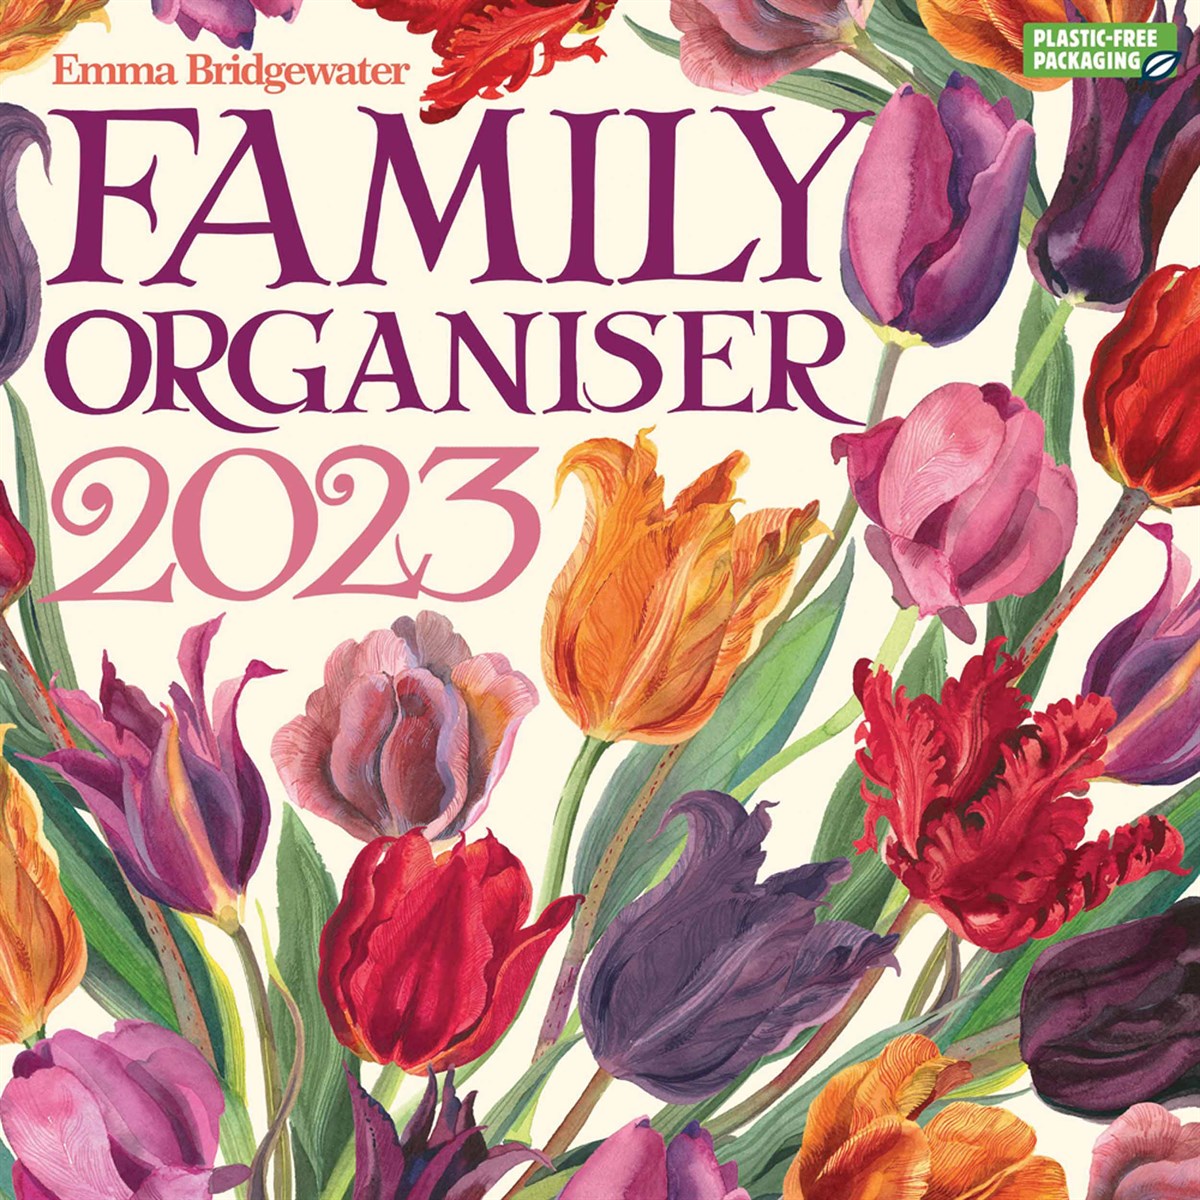 Emma Bridgewater, Tulips Family Planner 2023